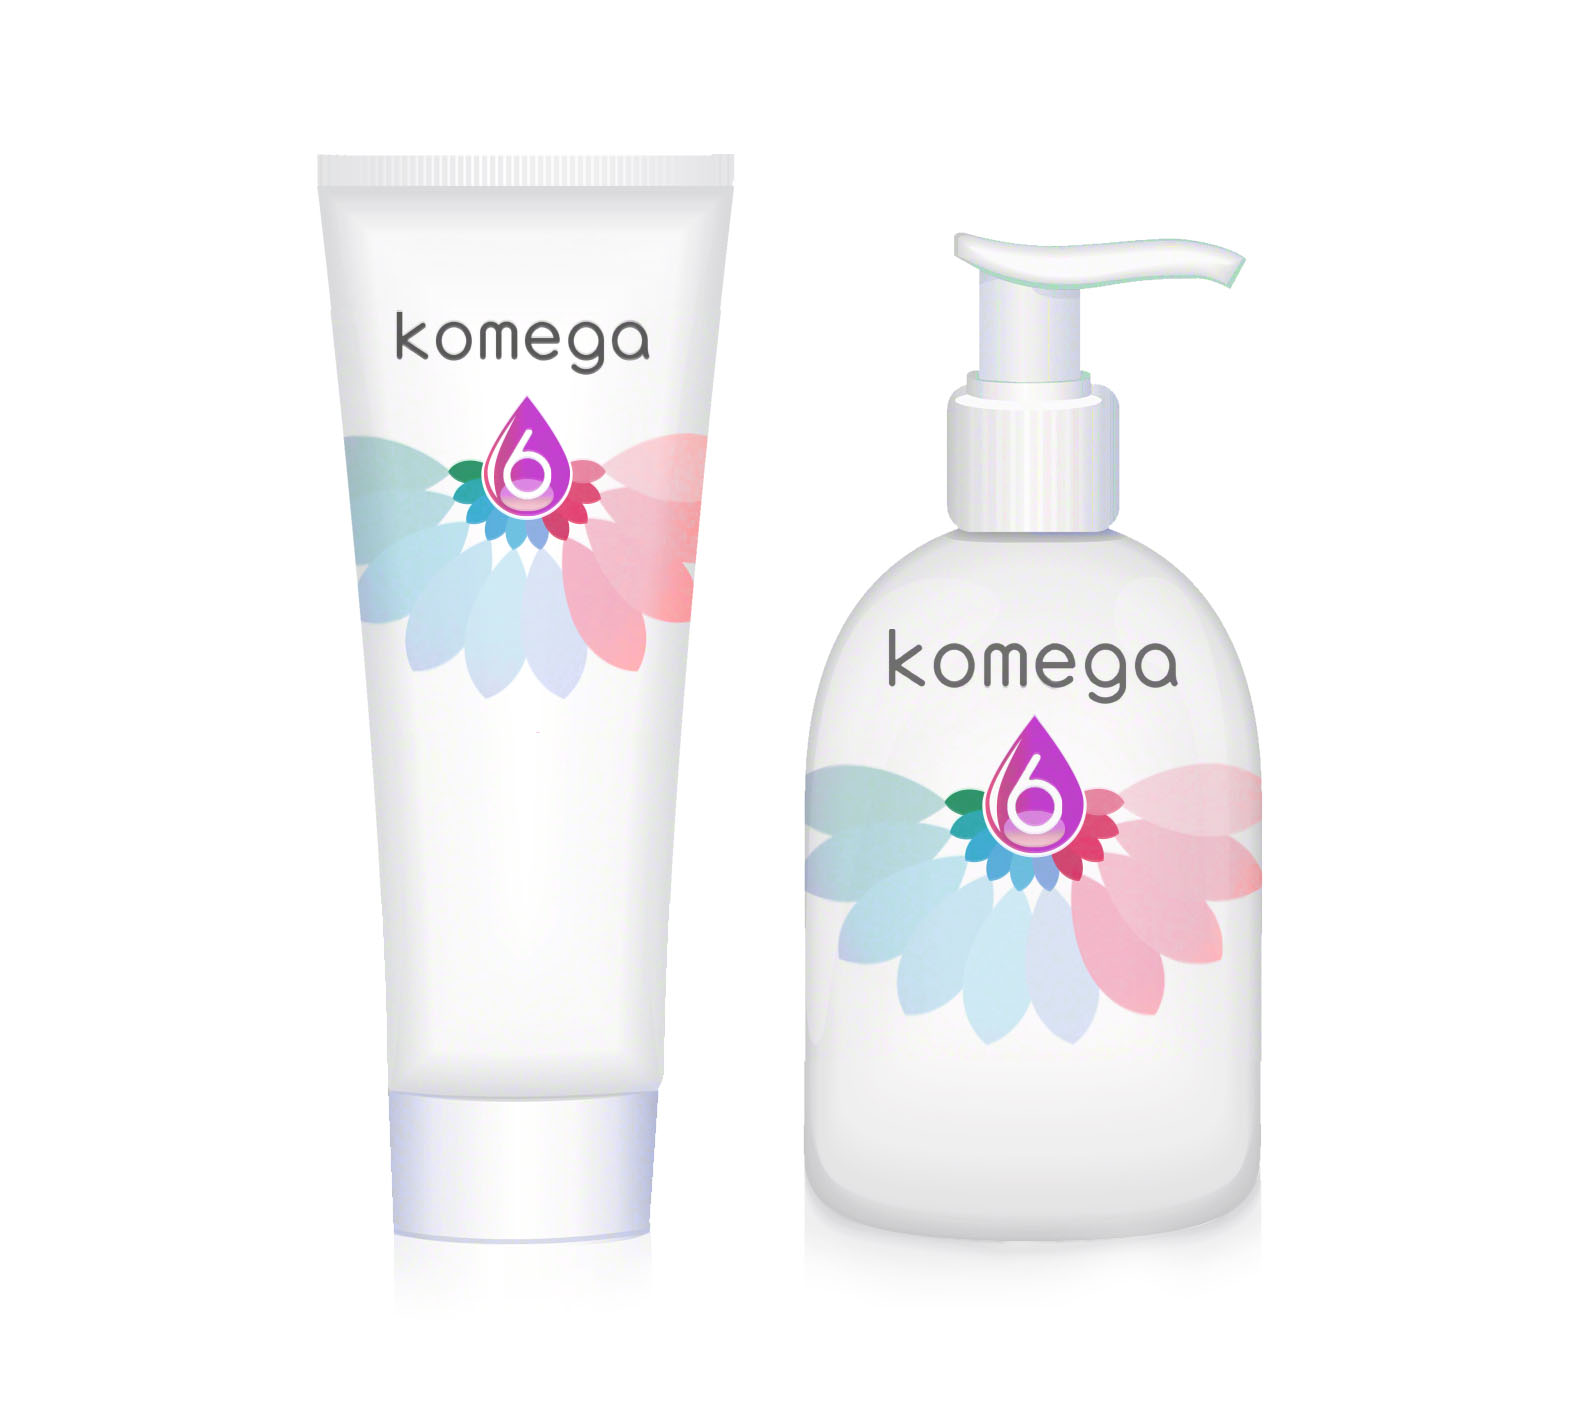 Dalya Kandil created brand identity POCs for Komega 6 Pure Kenaf Seed Oil